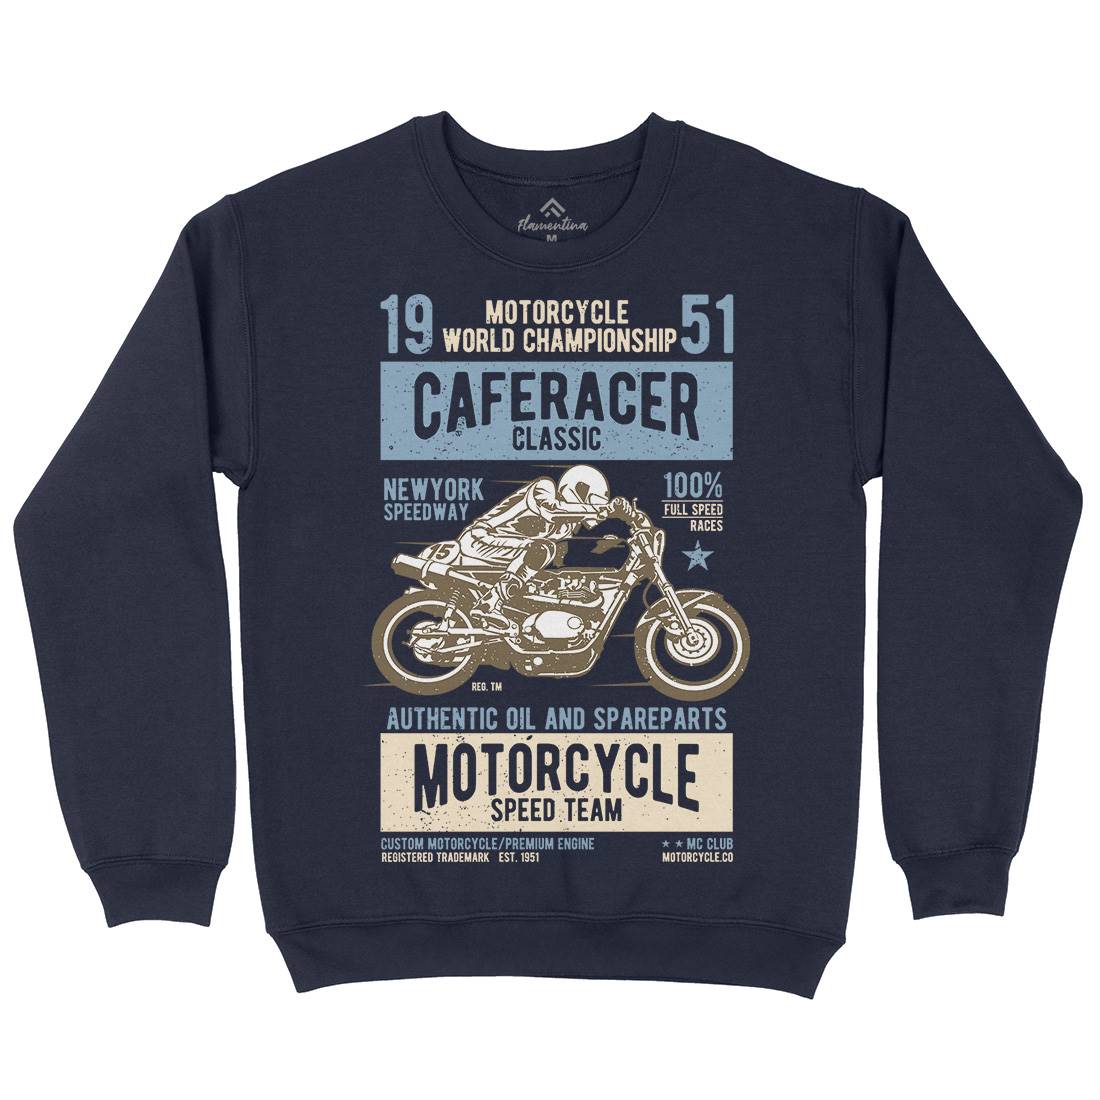 Caferacer Kids Crew Neck Sweatshirt Motorcycles A629